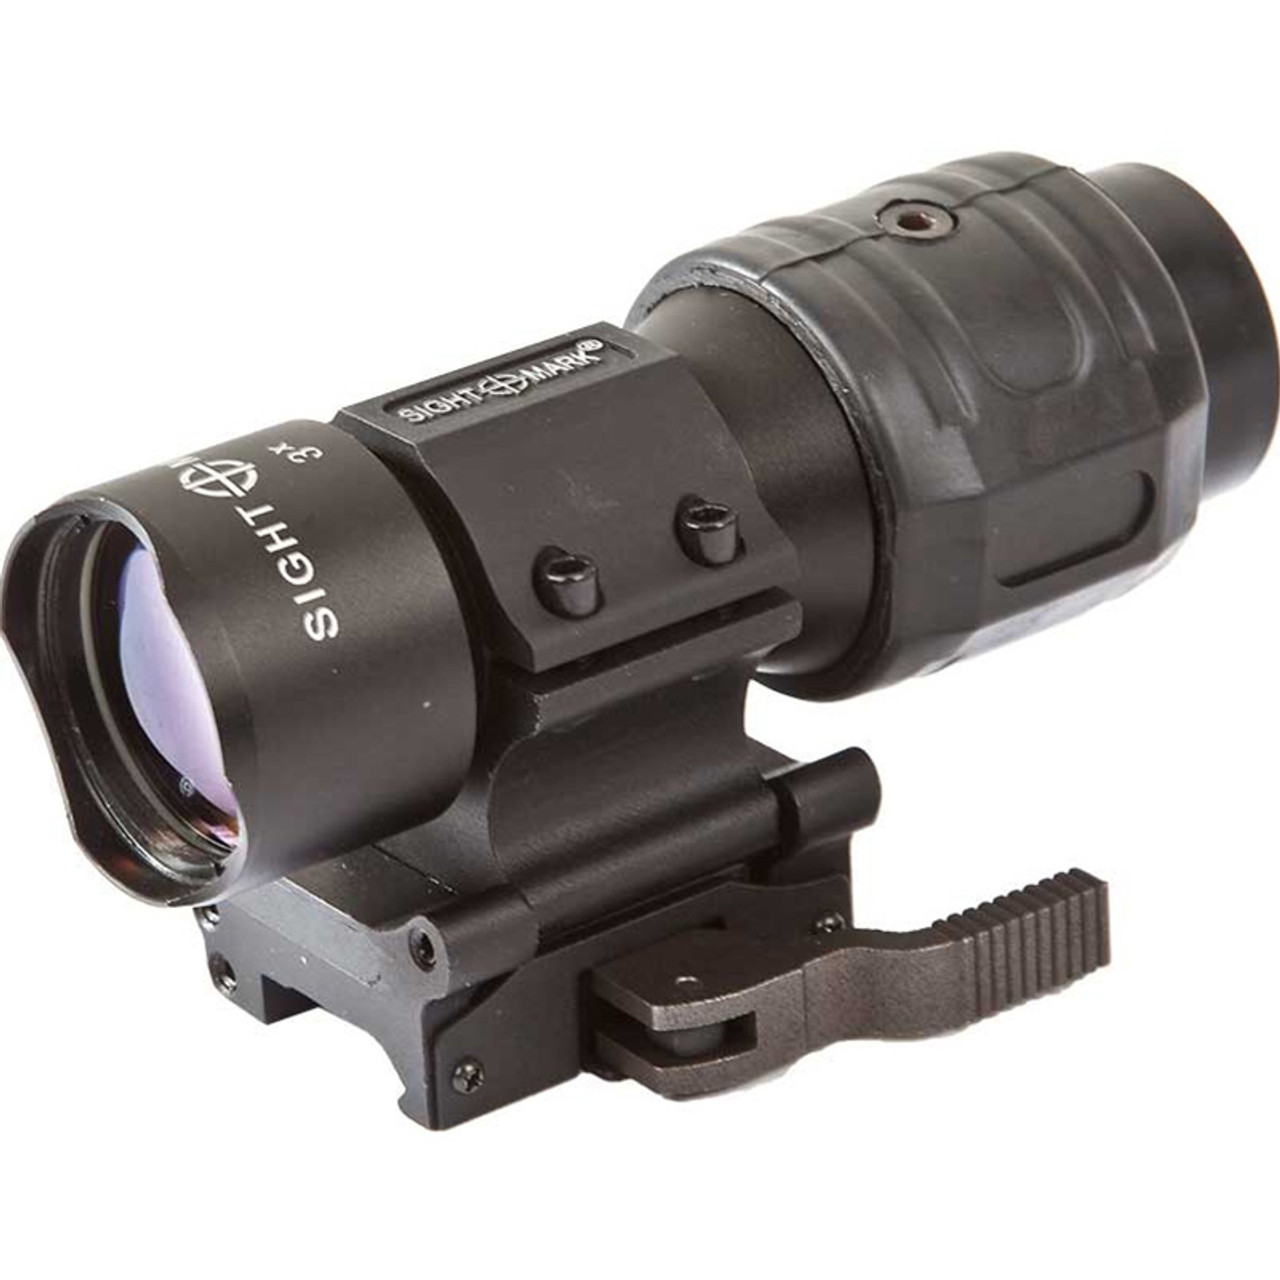 Sightmark 3x Tactical Magnifier - Centerfire Systems